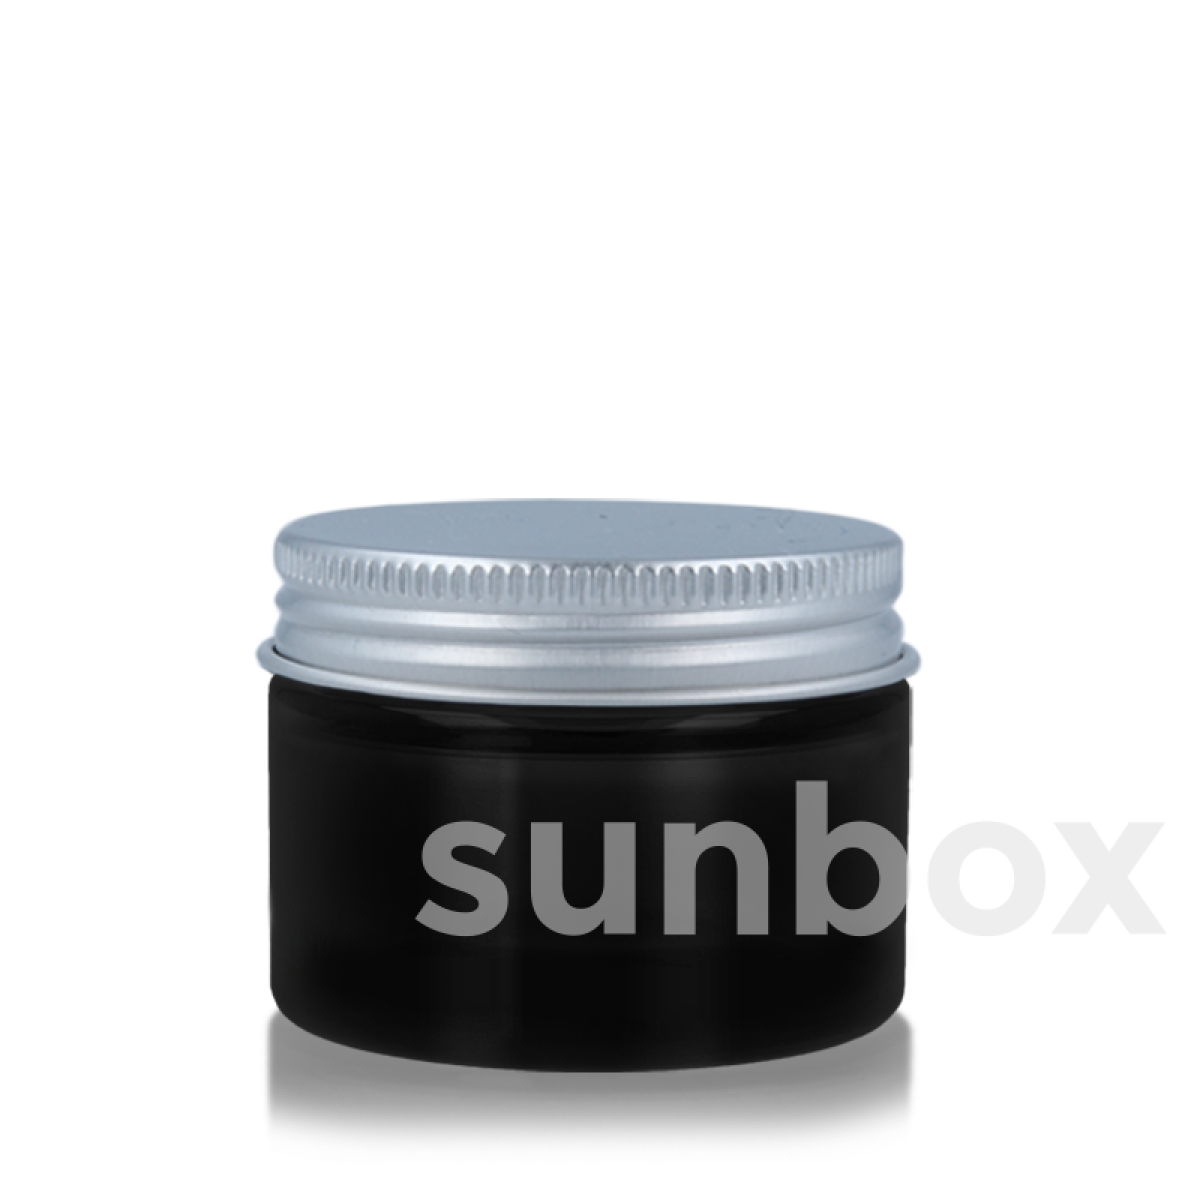 sunbox_prod_4